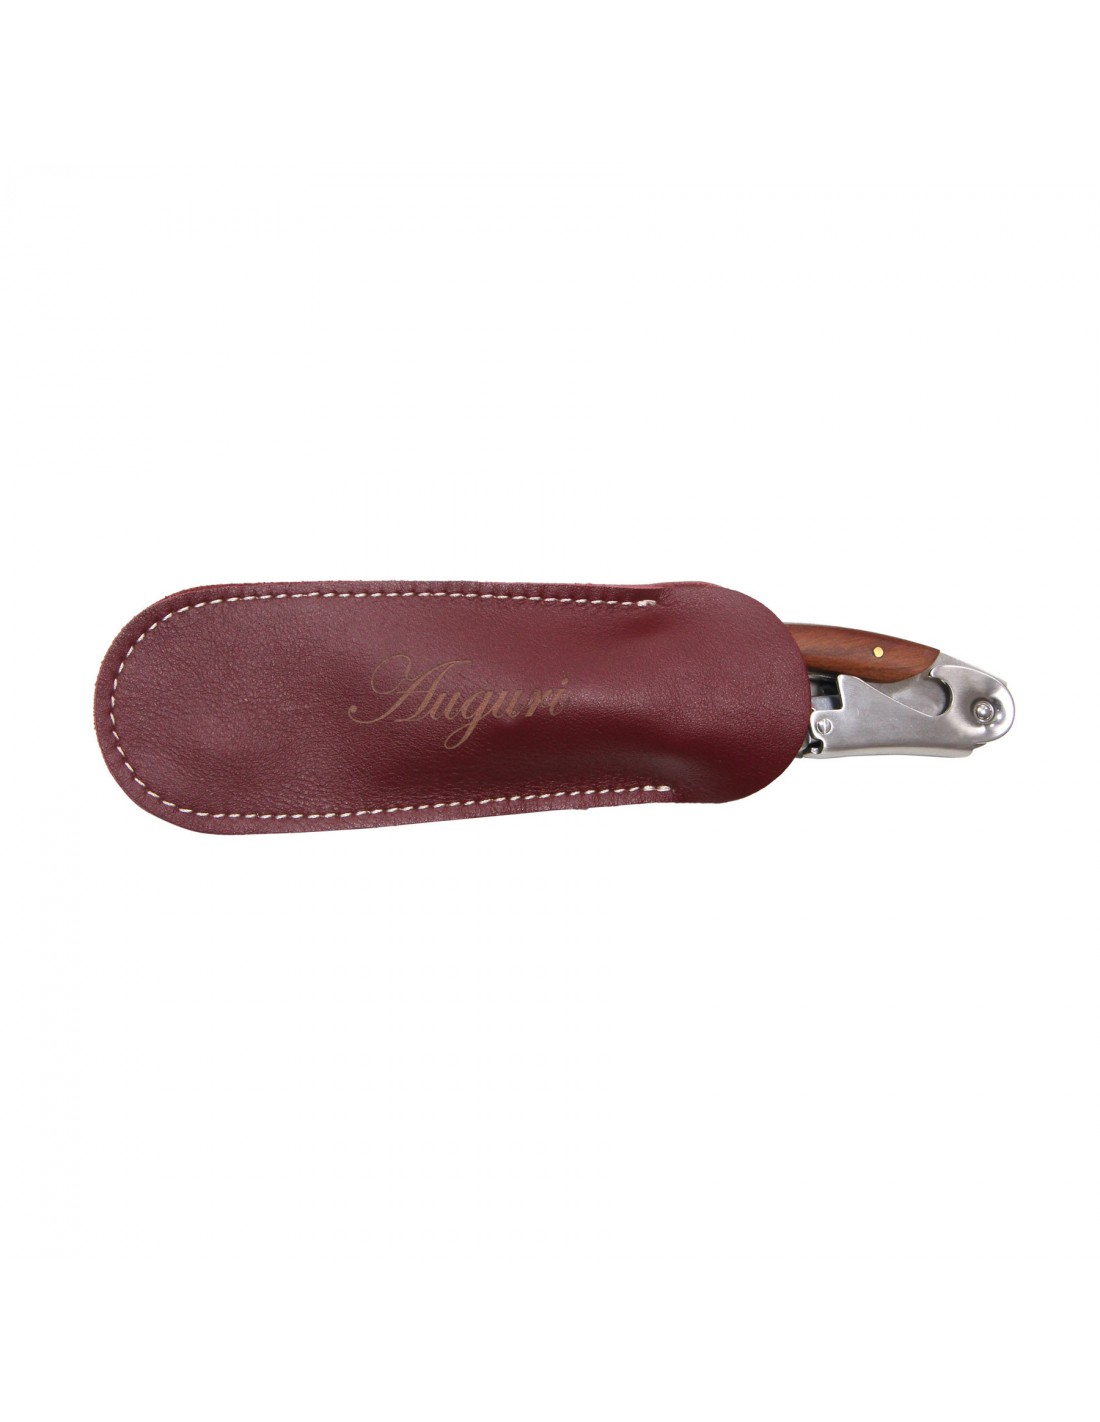 Personalised Corkscrew Leather Case | oohwine.com